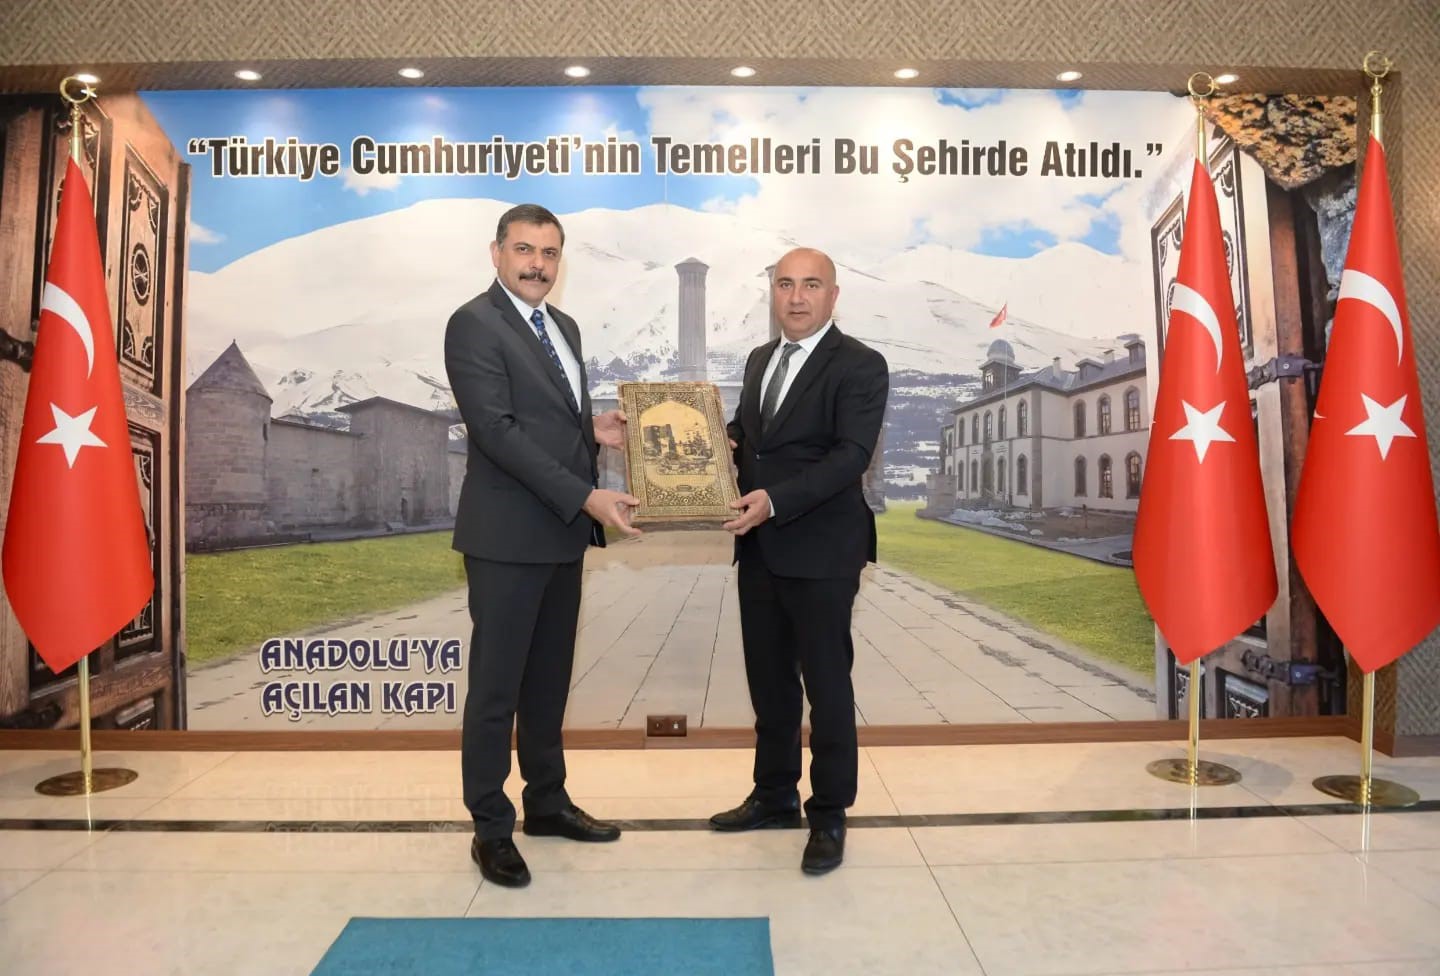 Azerbaycan Cumhuriyeti Kars Başkonsolosu Nuru Guliyev, Erzurum Valisi Mustafa Çiftçi'yi ziyaret etti